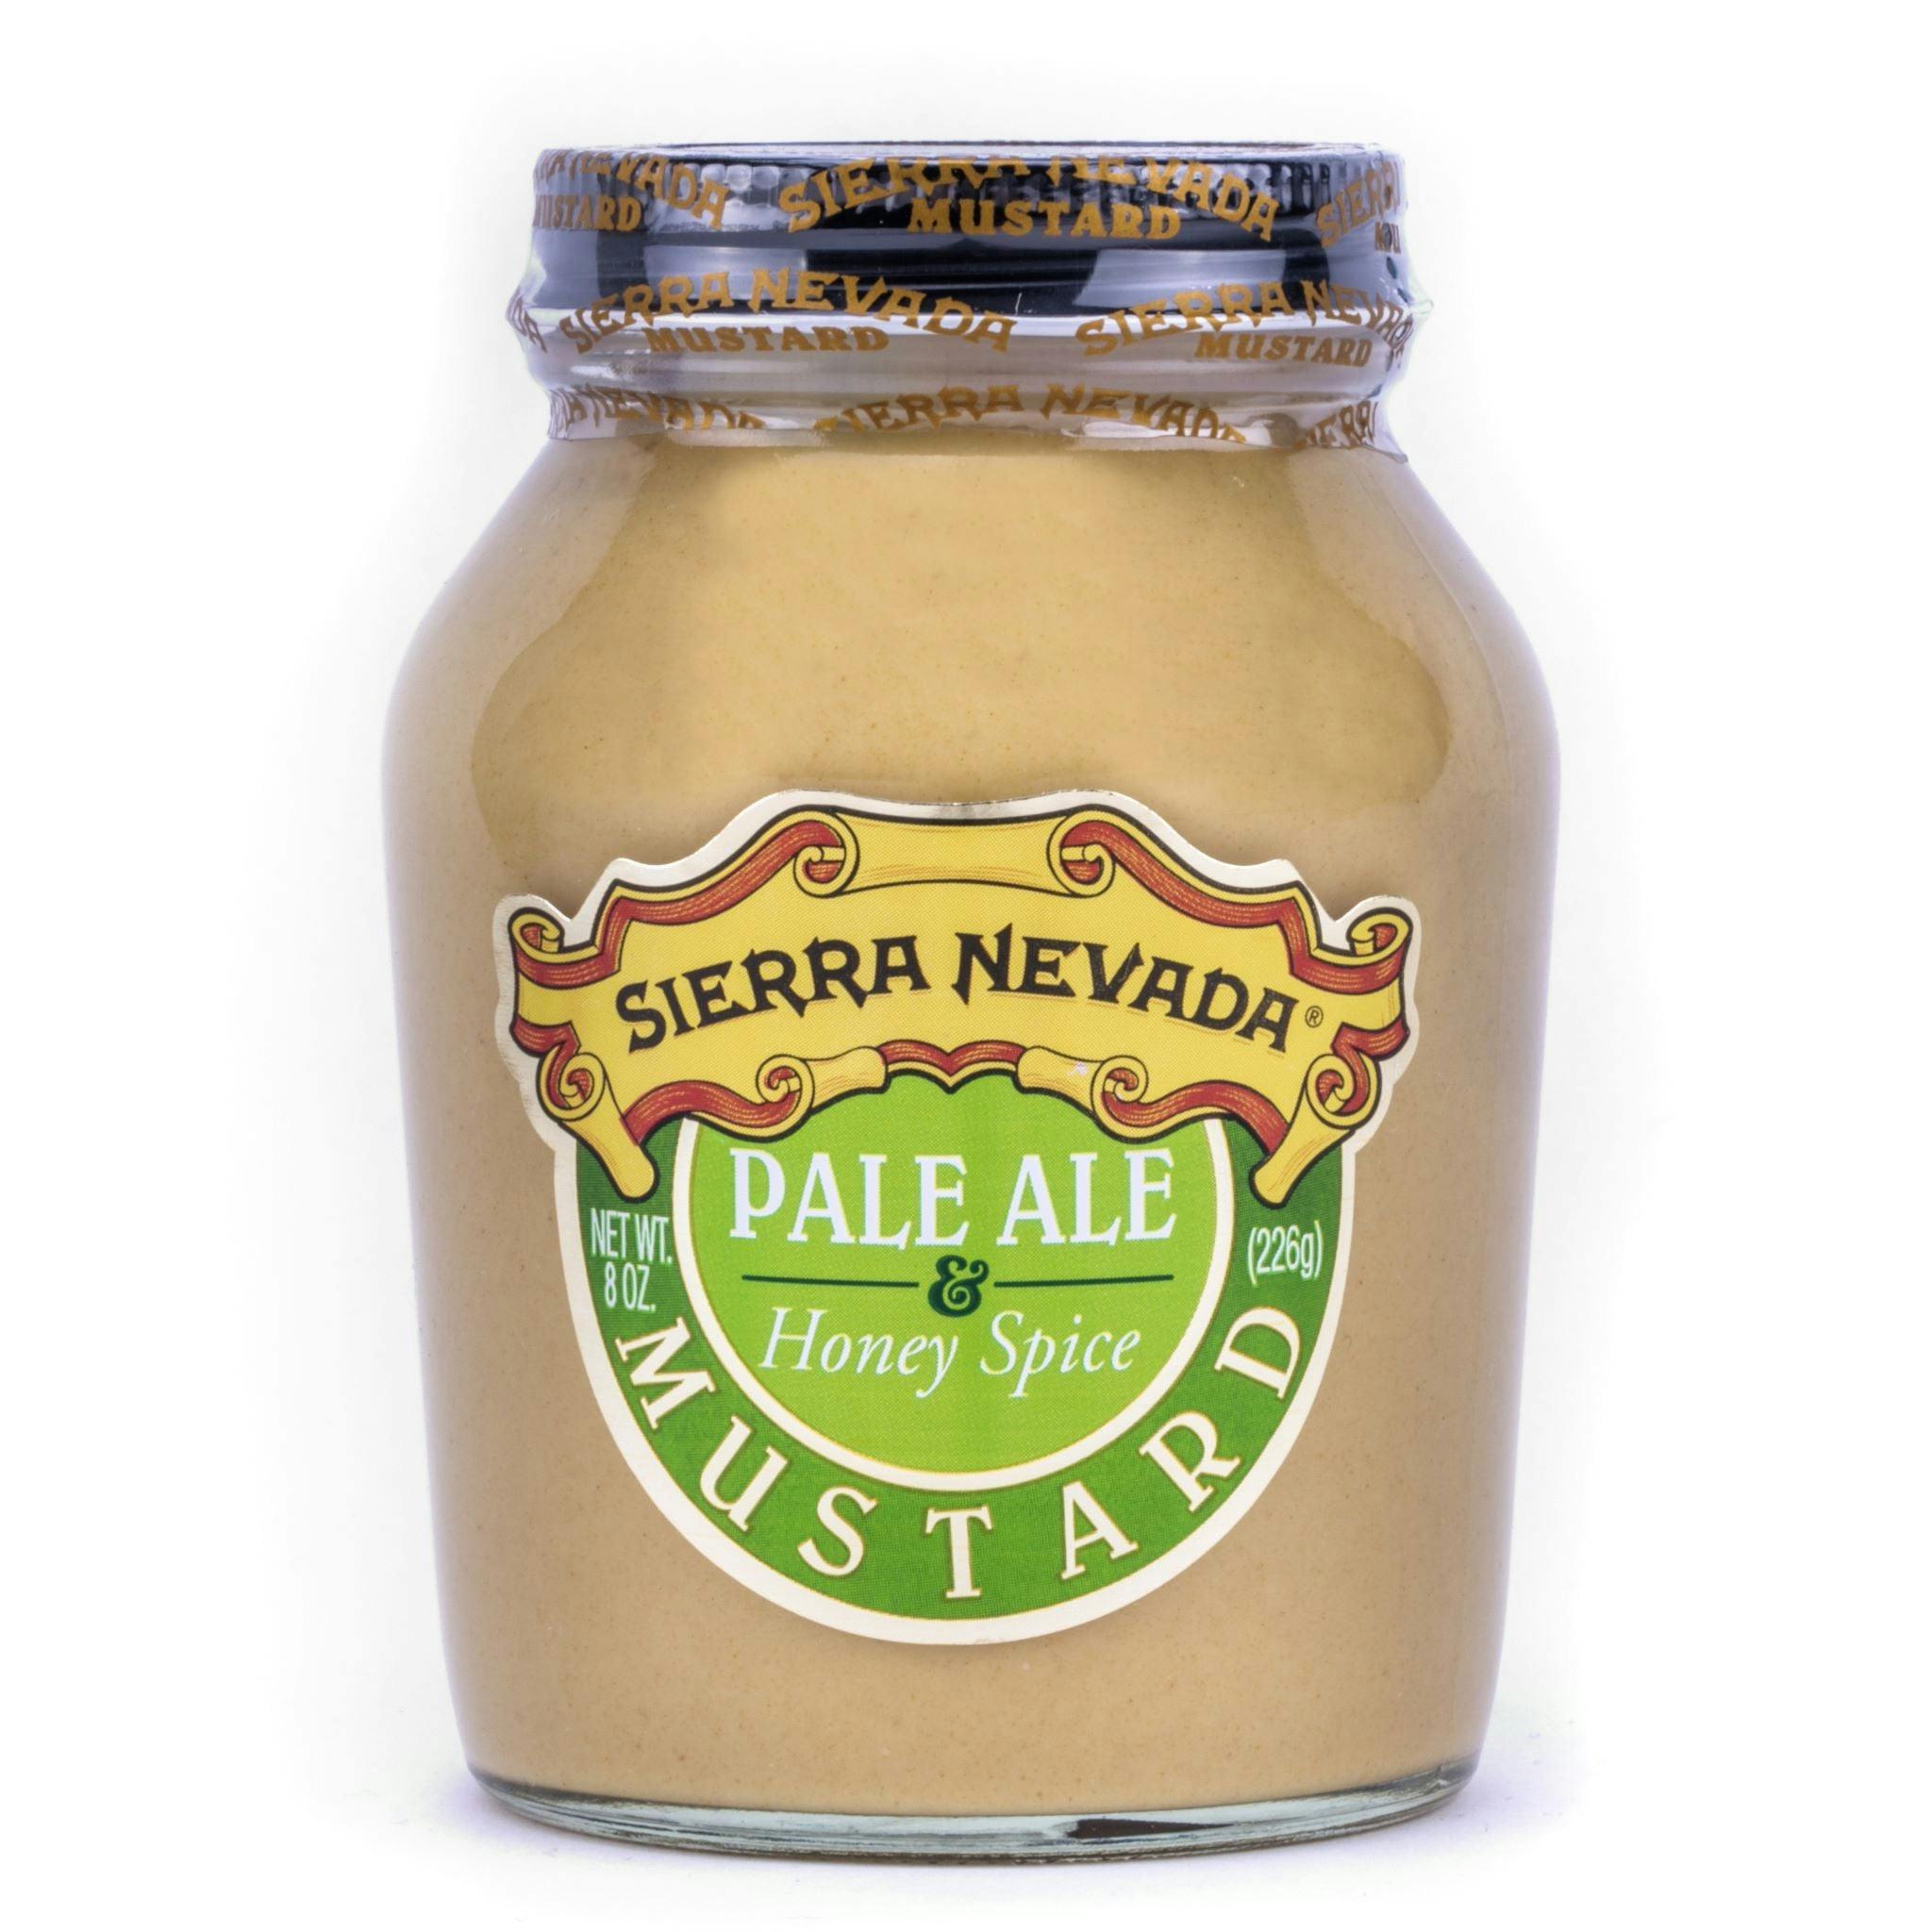 Sierra Nevada Pale ale honey mustard